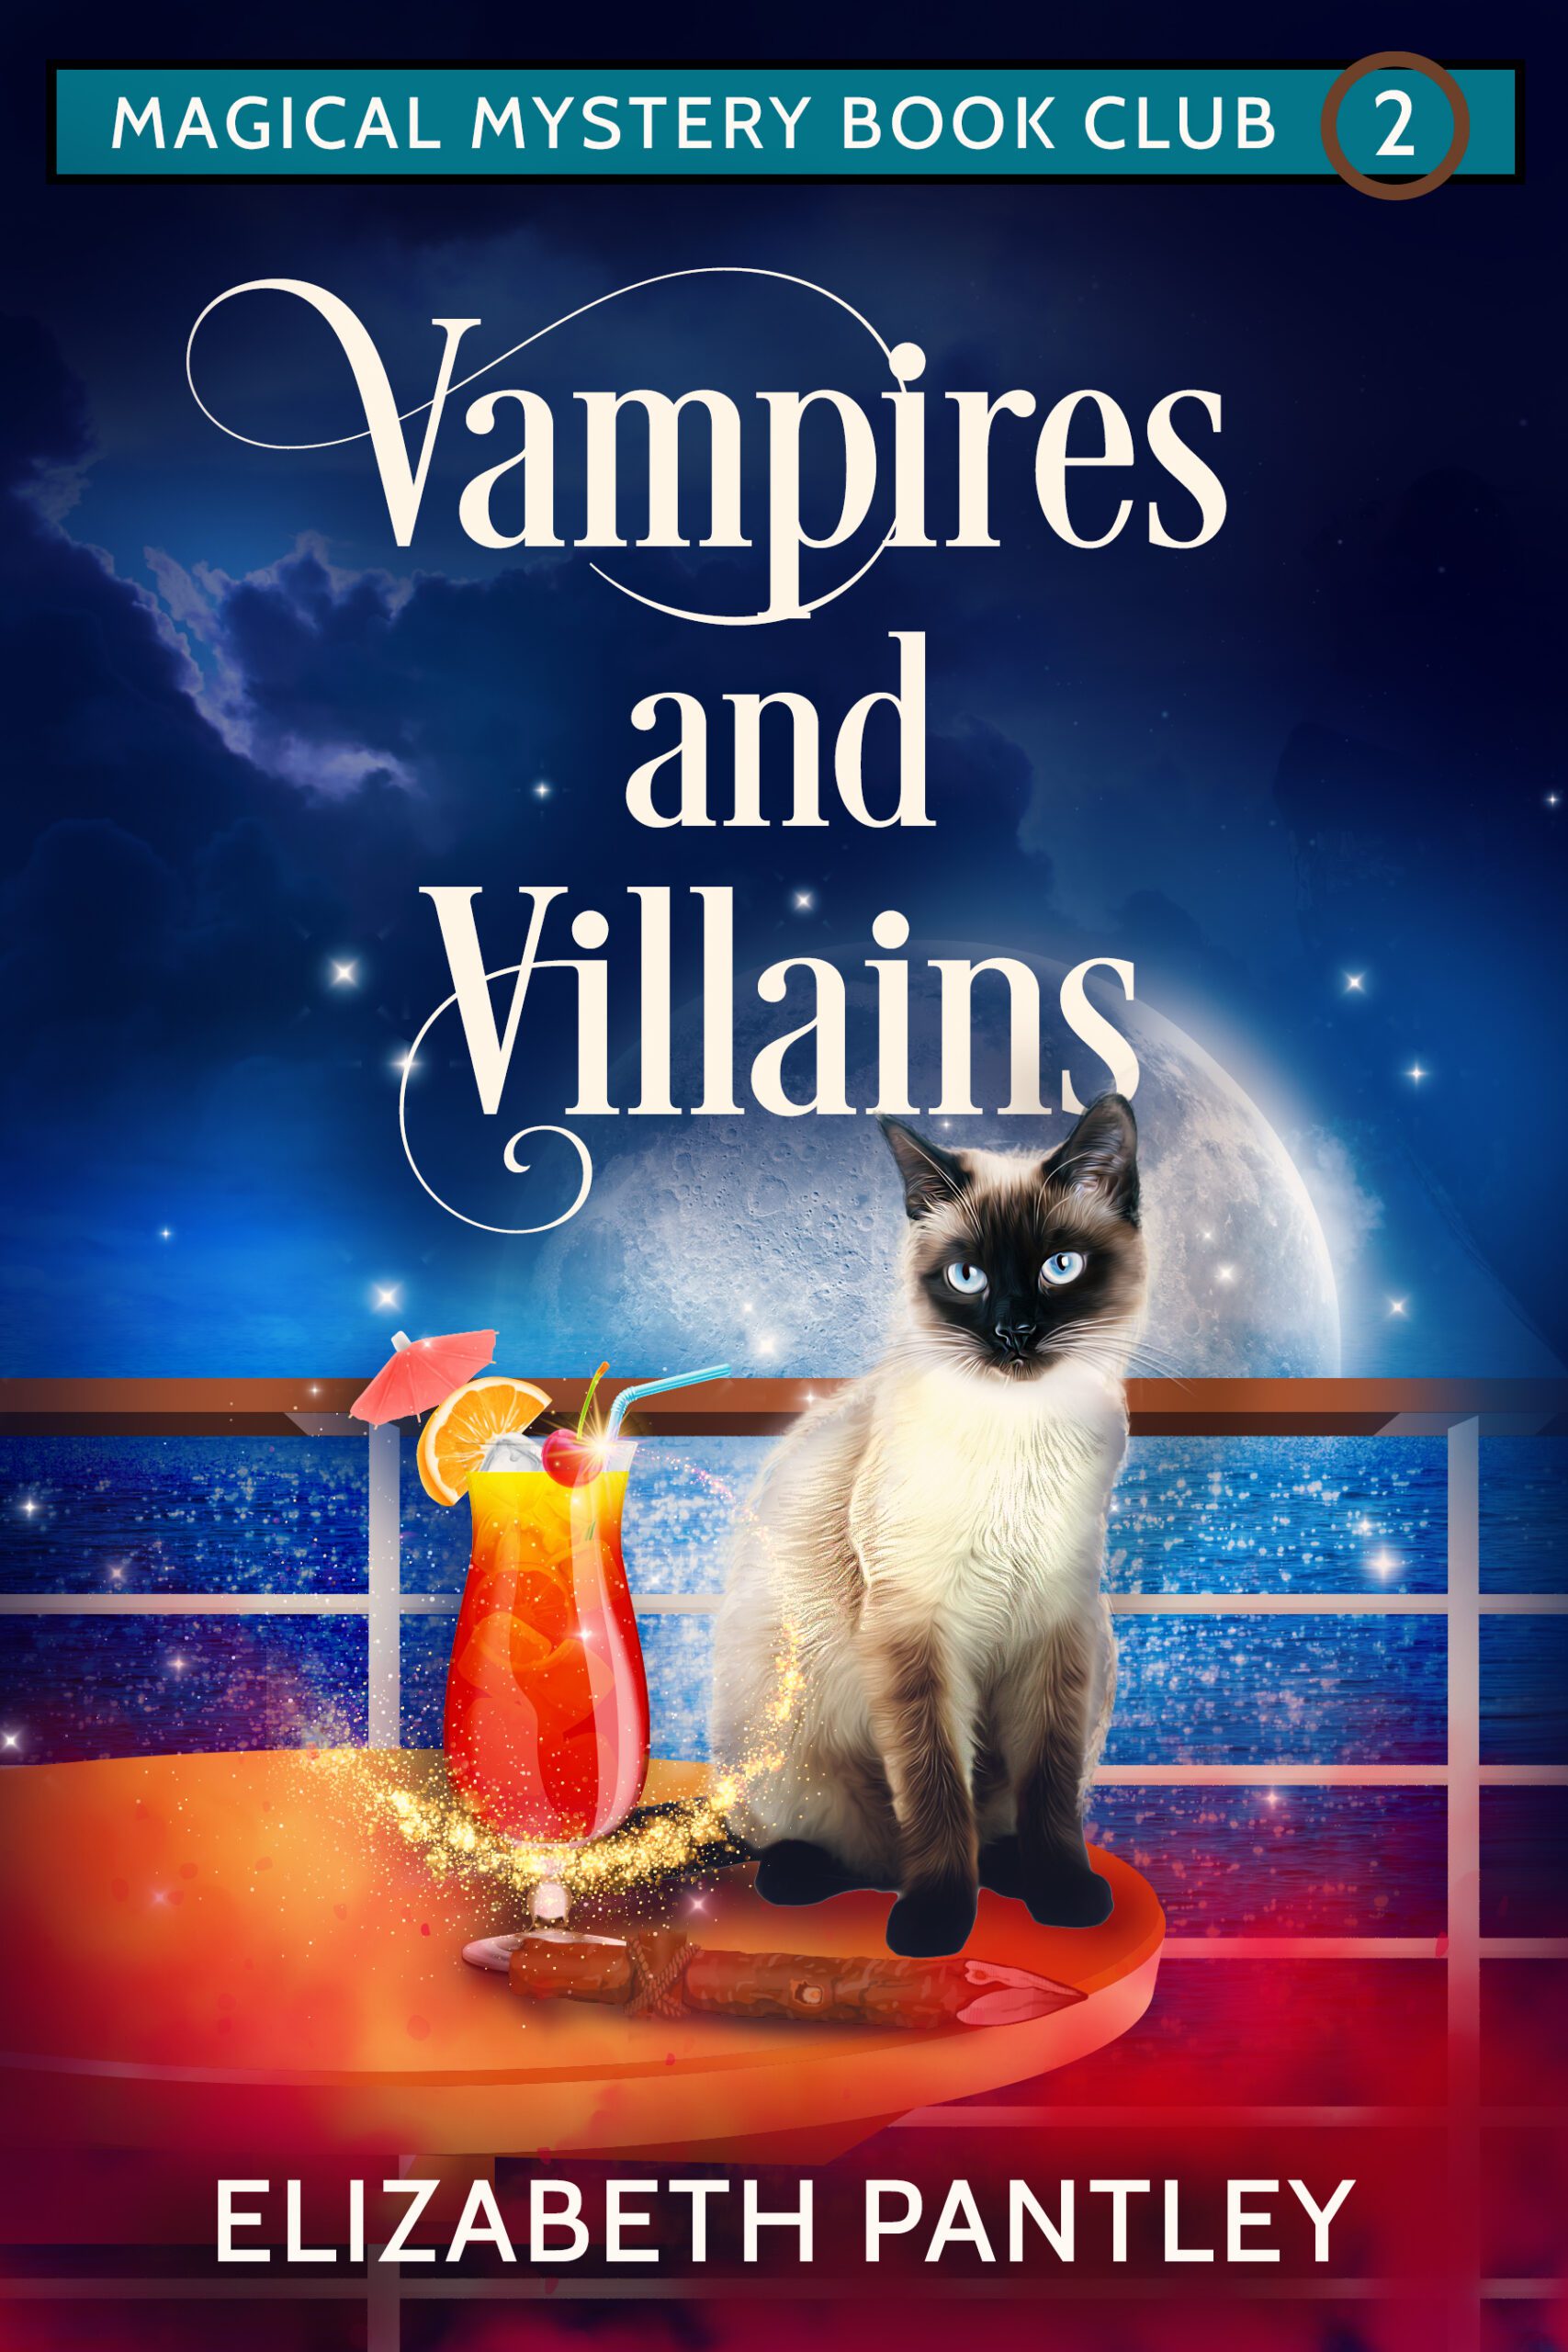 Vampires and Villains by Elizabeth Pantley